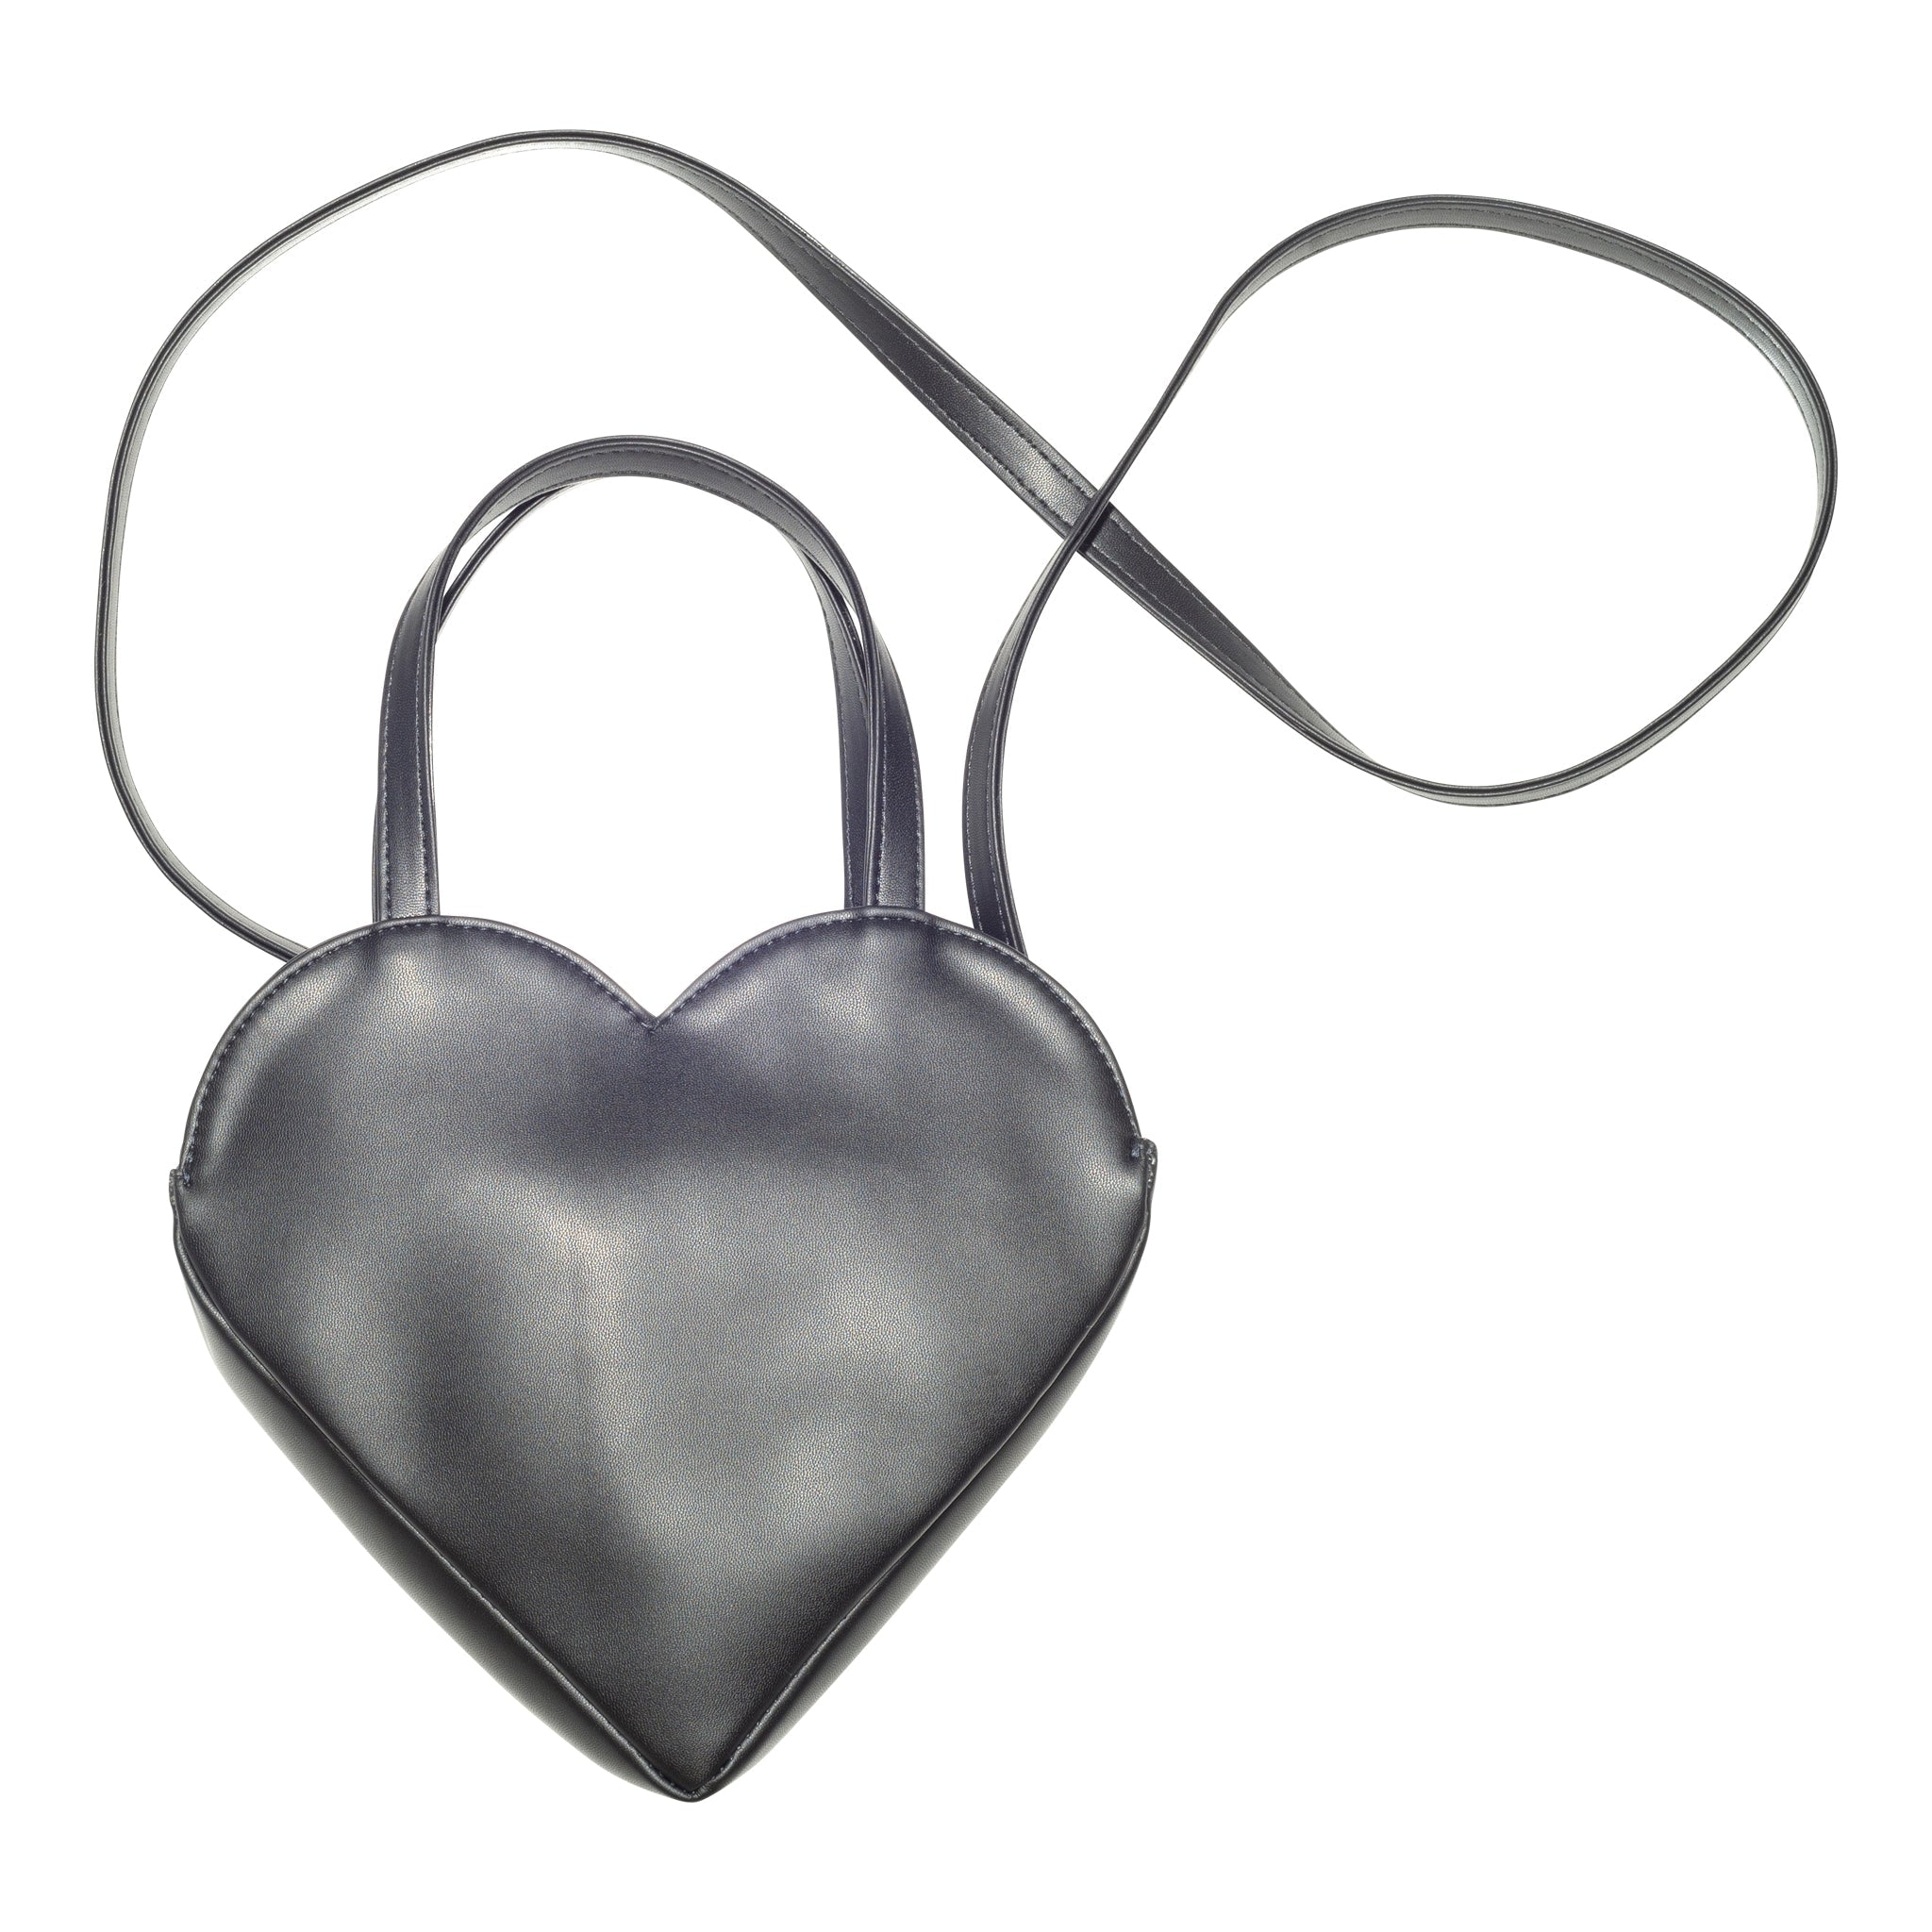 Stylish Black Heart Bag from Apollo Box